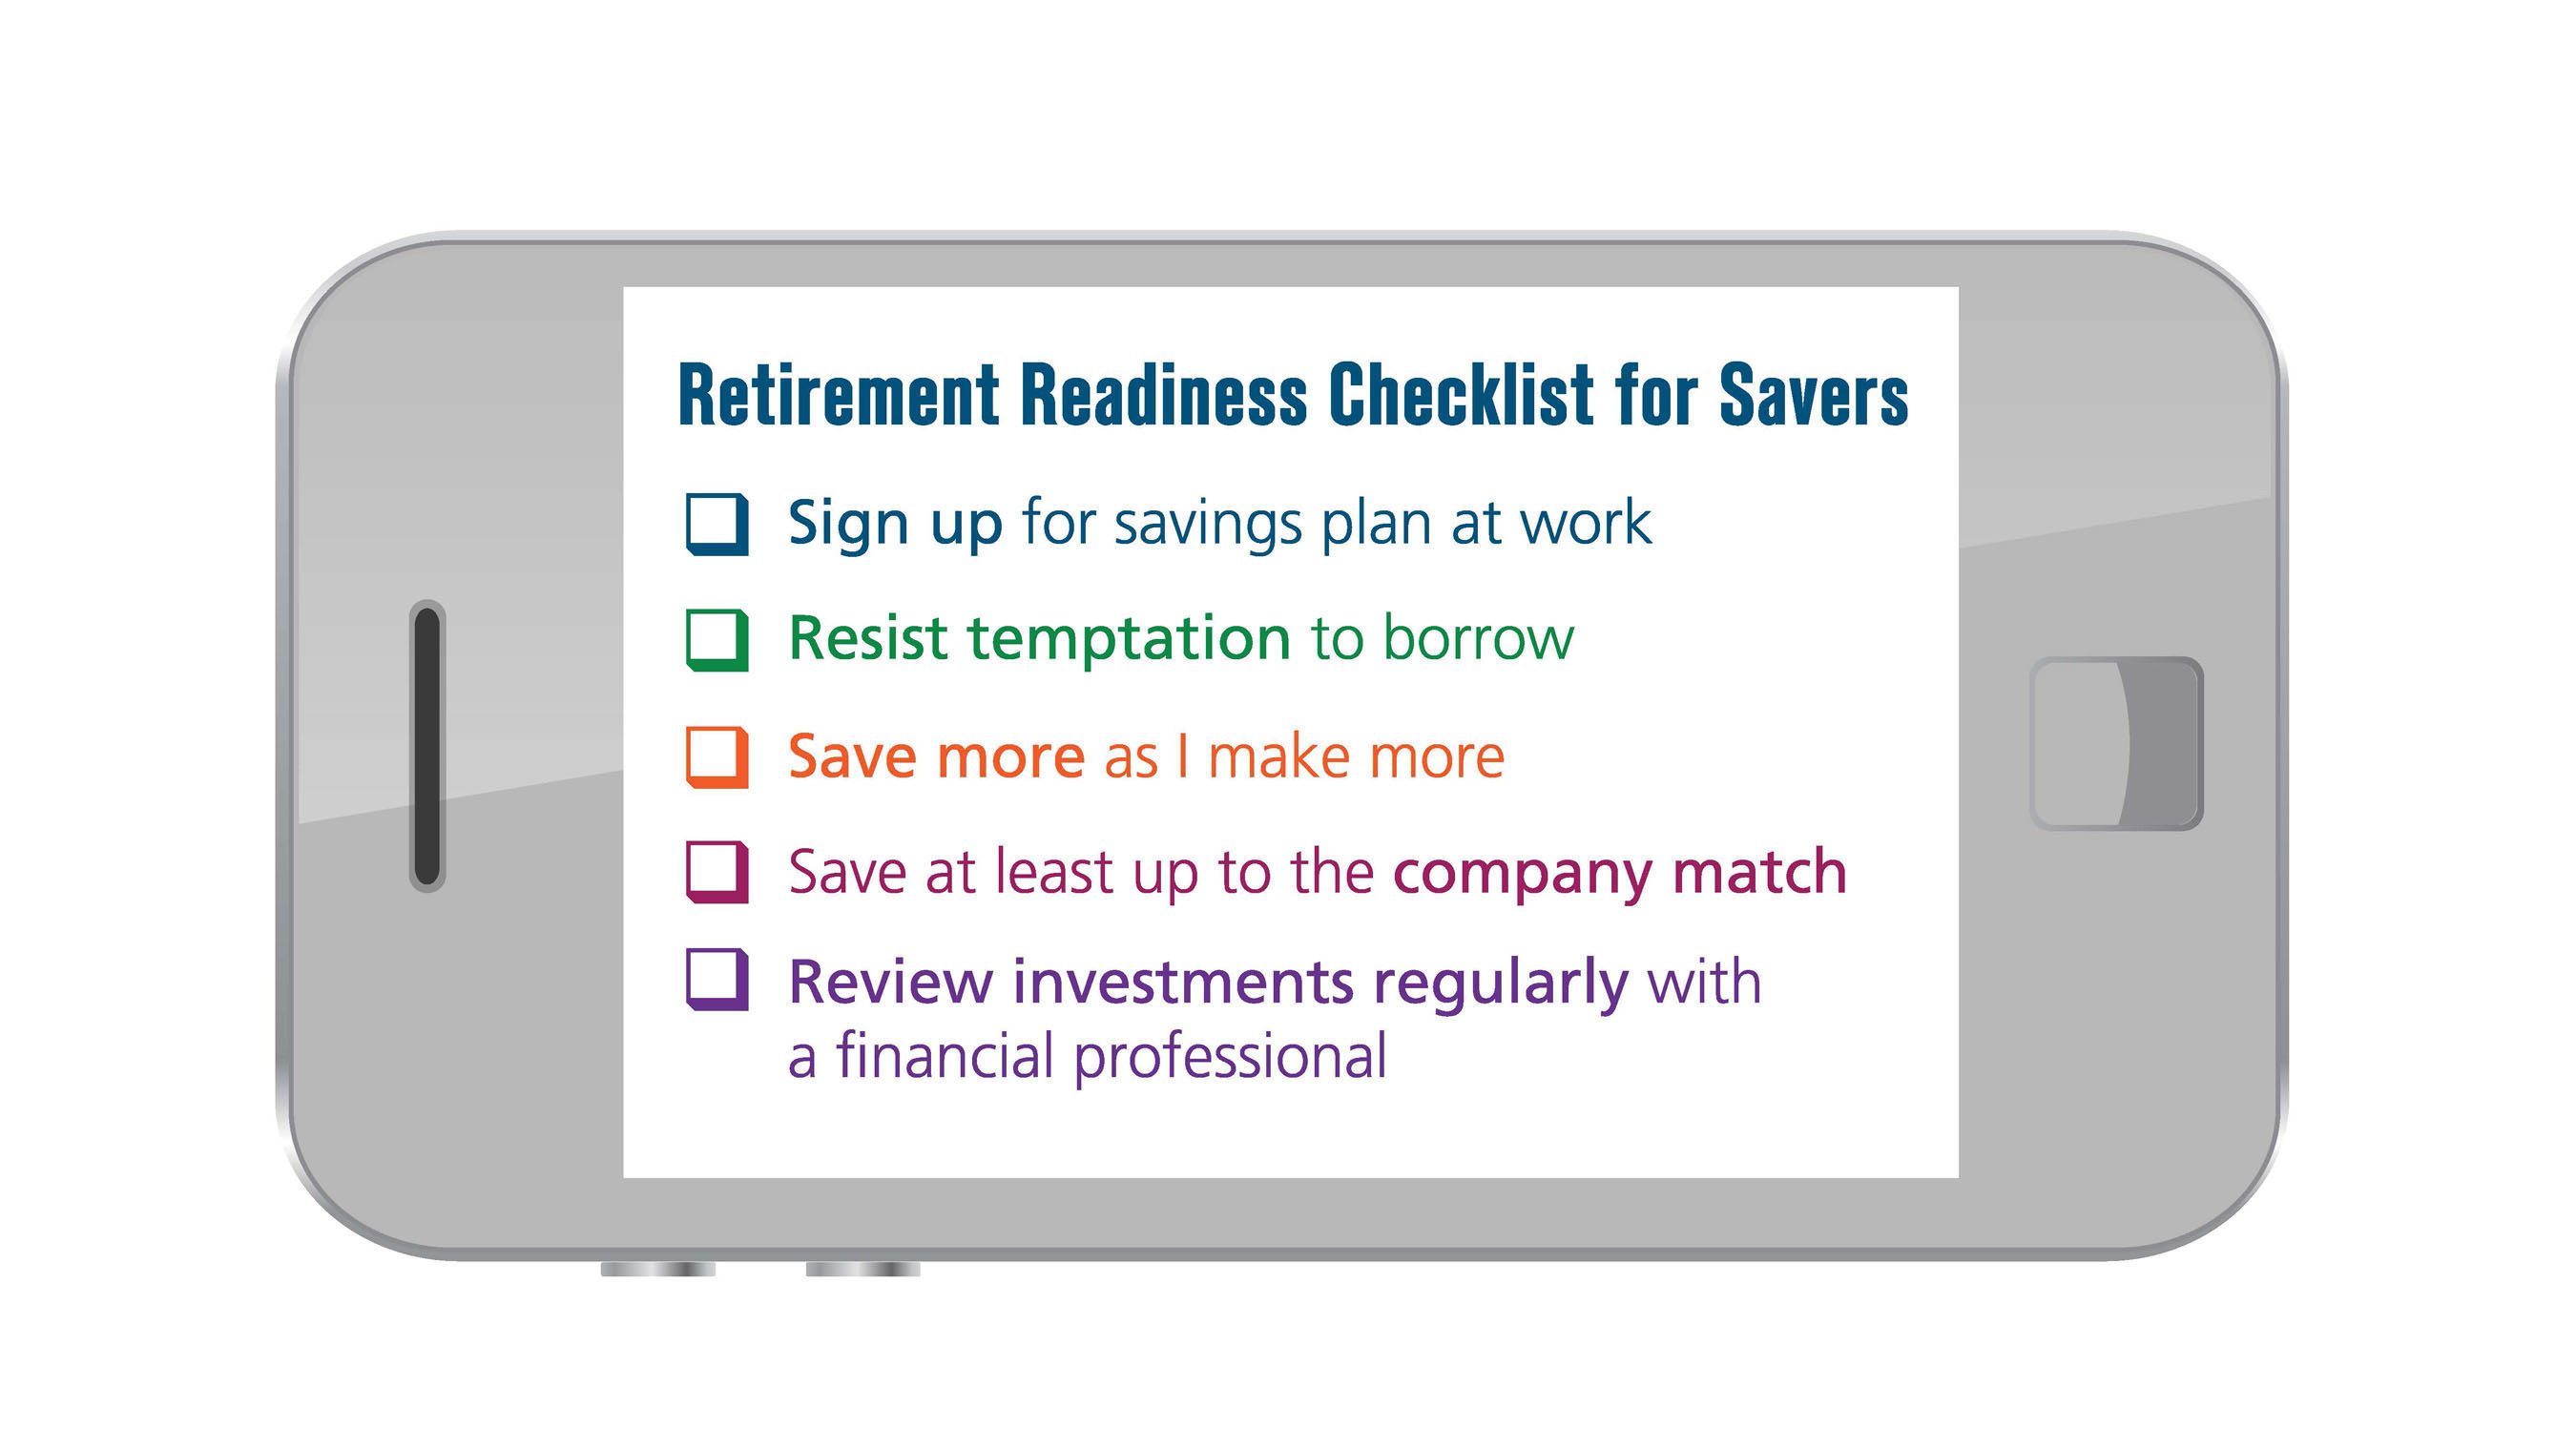 Retirement Readiness Checklist for Savers. (PRNewsFoto/Lincoln Financial Group) (PRNewsFoto/LINCOLN FINANCIAL GROUP)